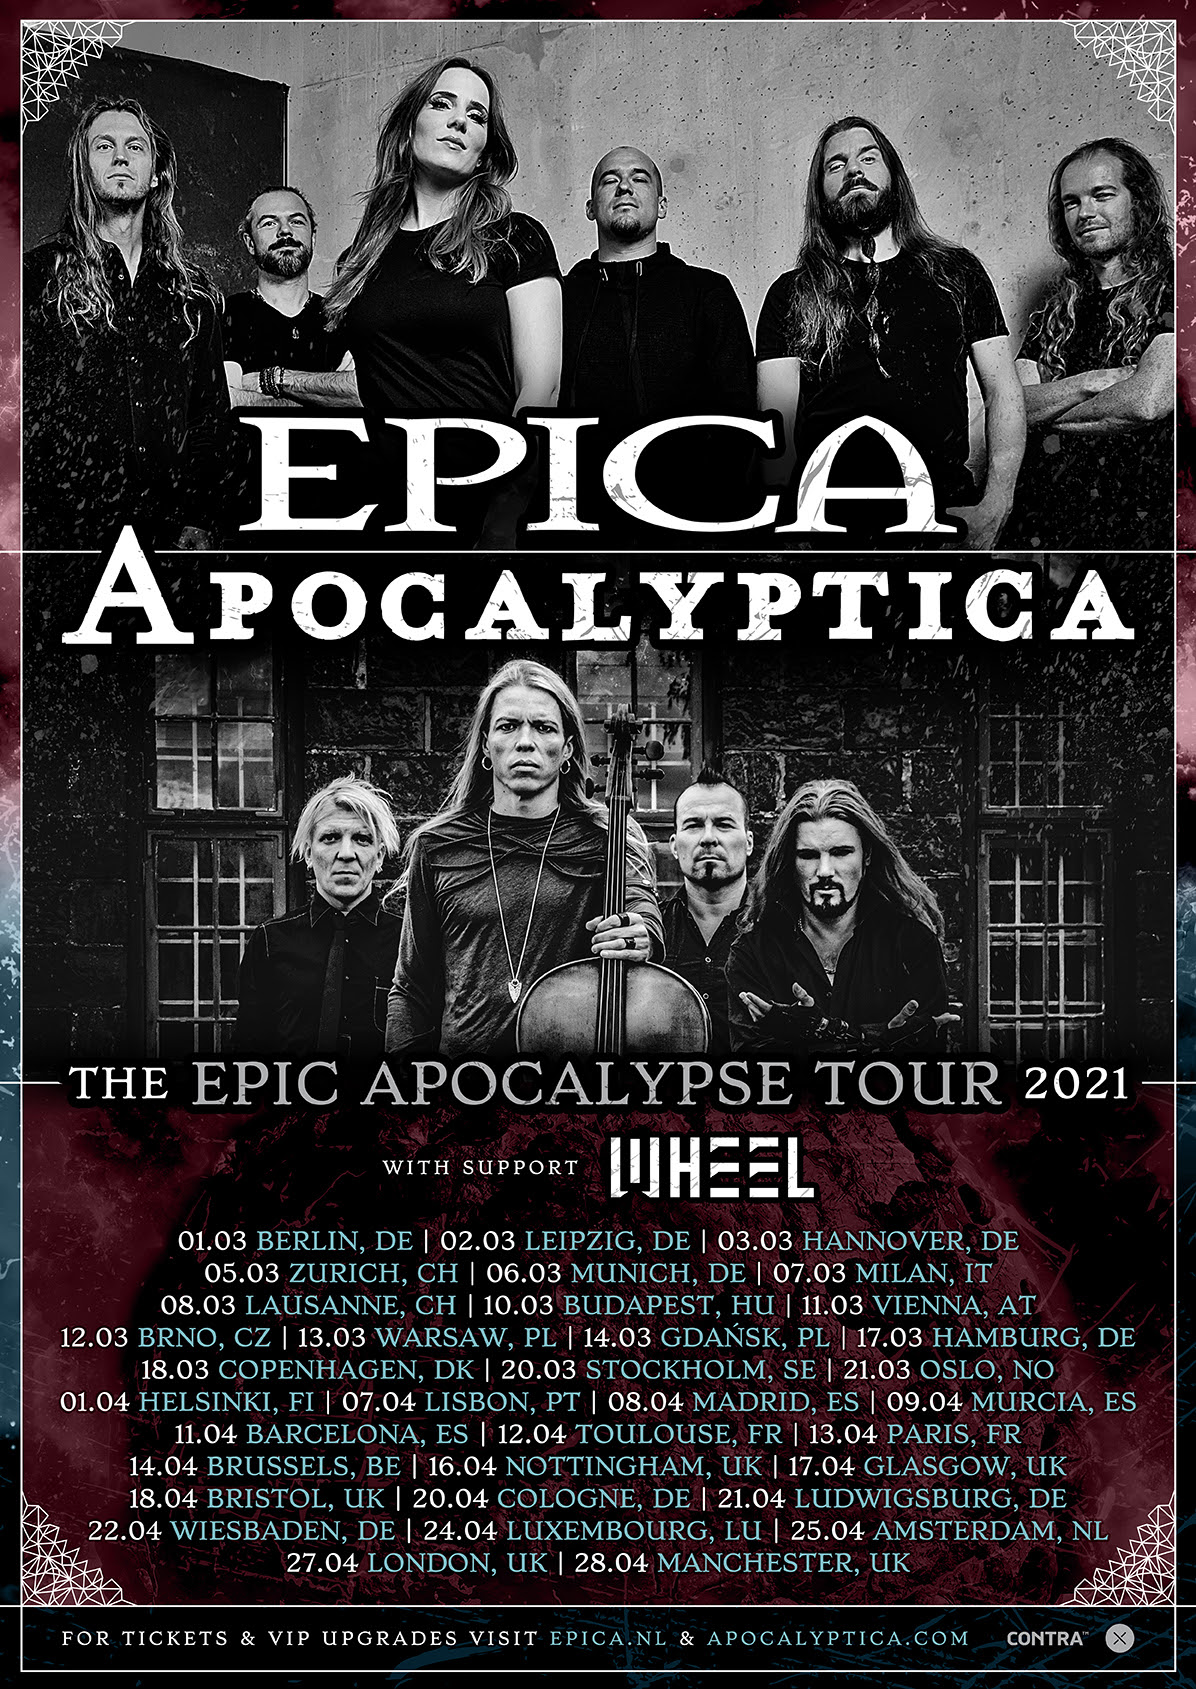 Epica's European CoHeadline Tour With Apocalyptica Postponed Till